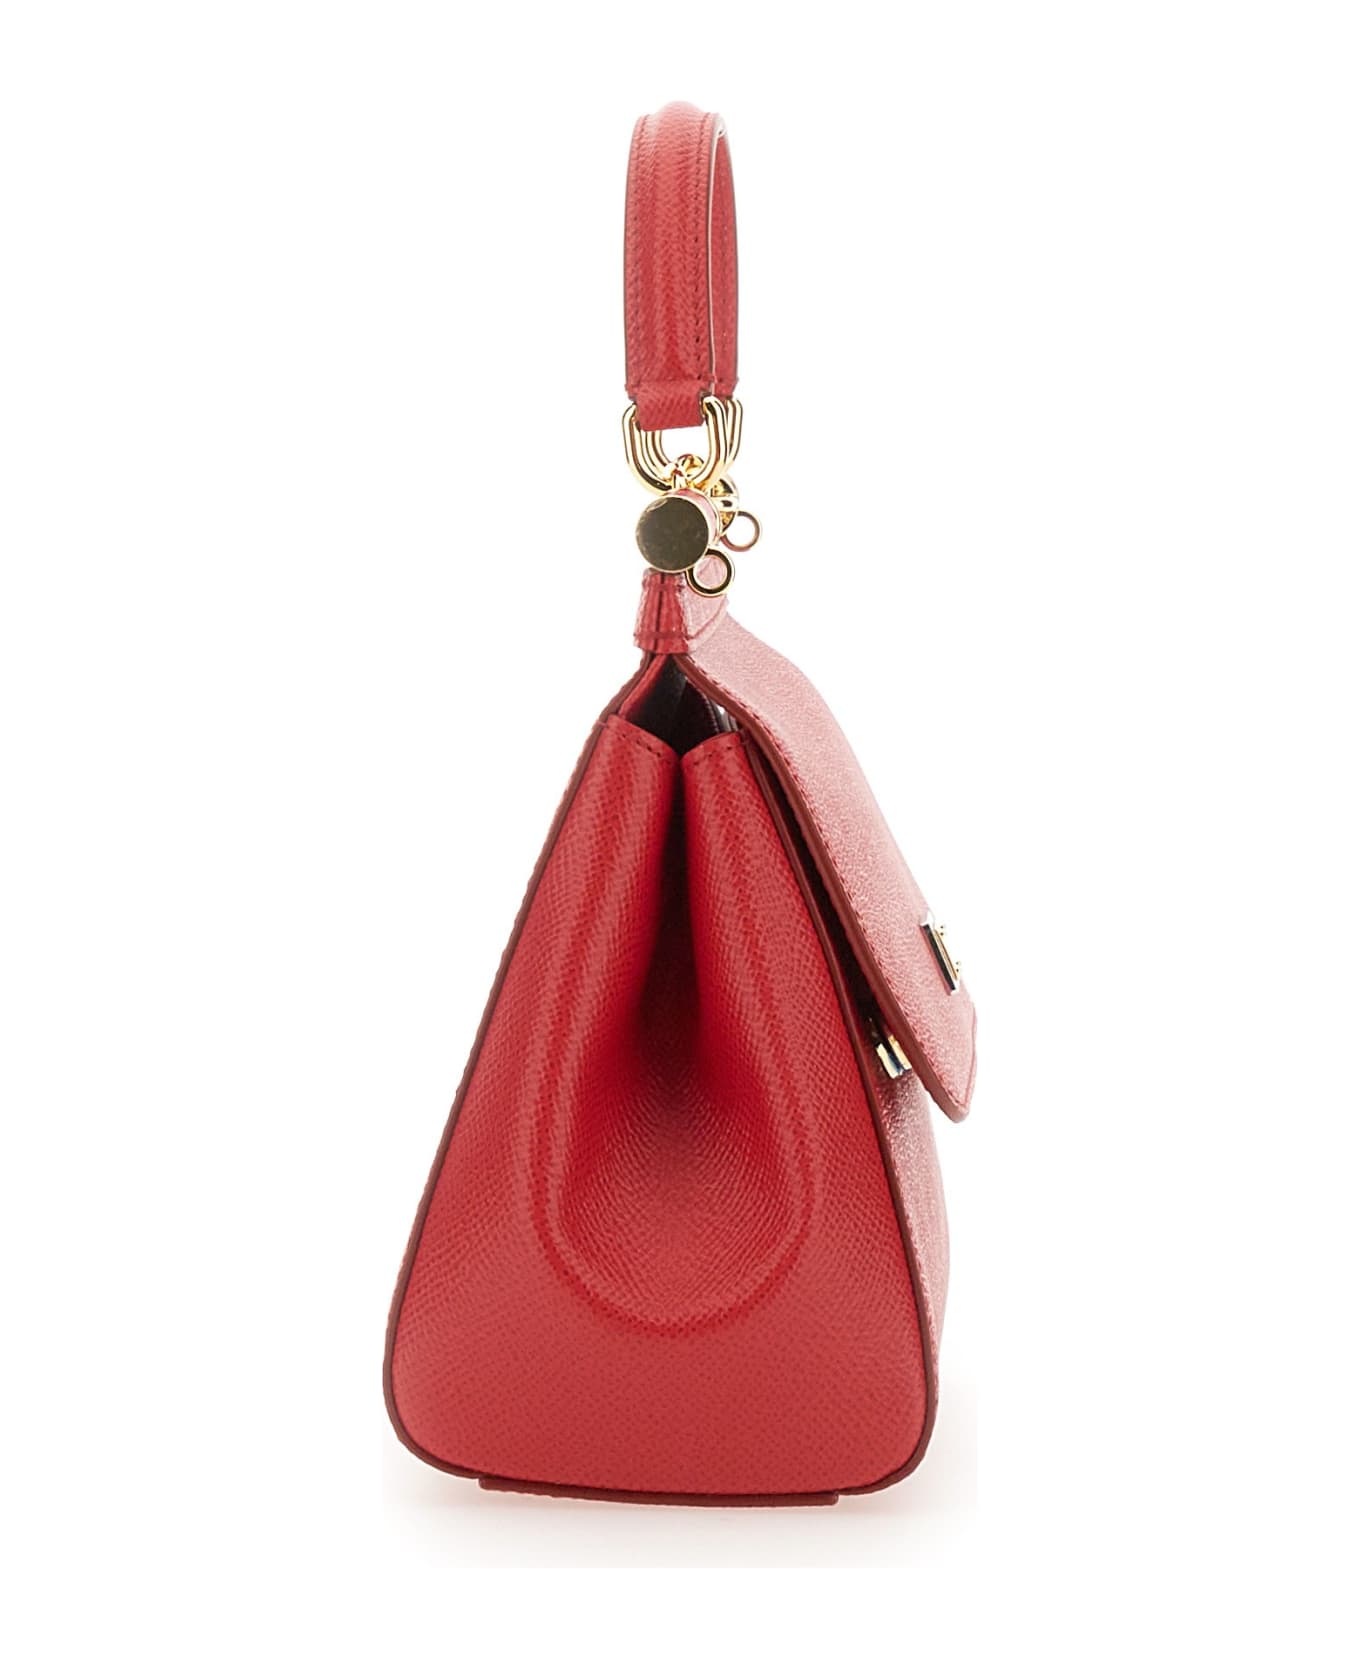 Dolce & Gabbana Bag "sicily" - ROSSO